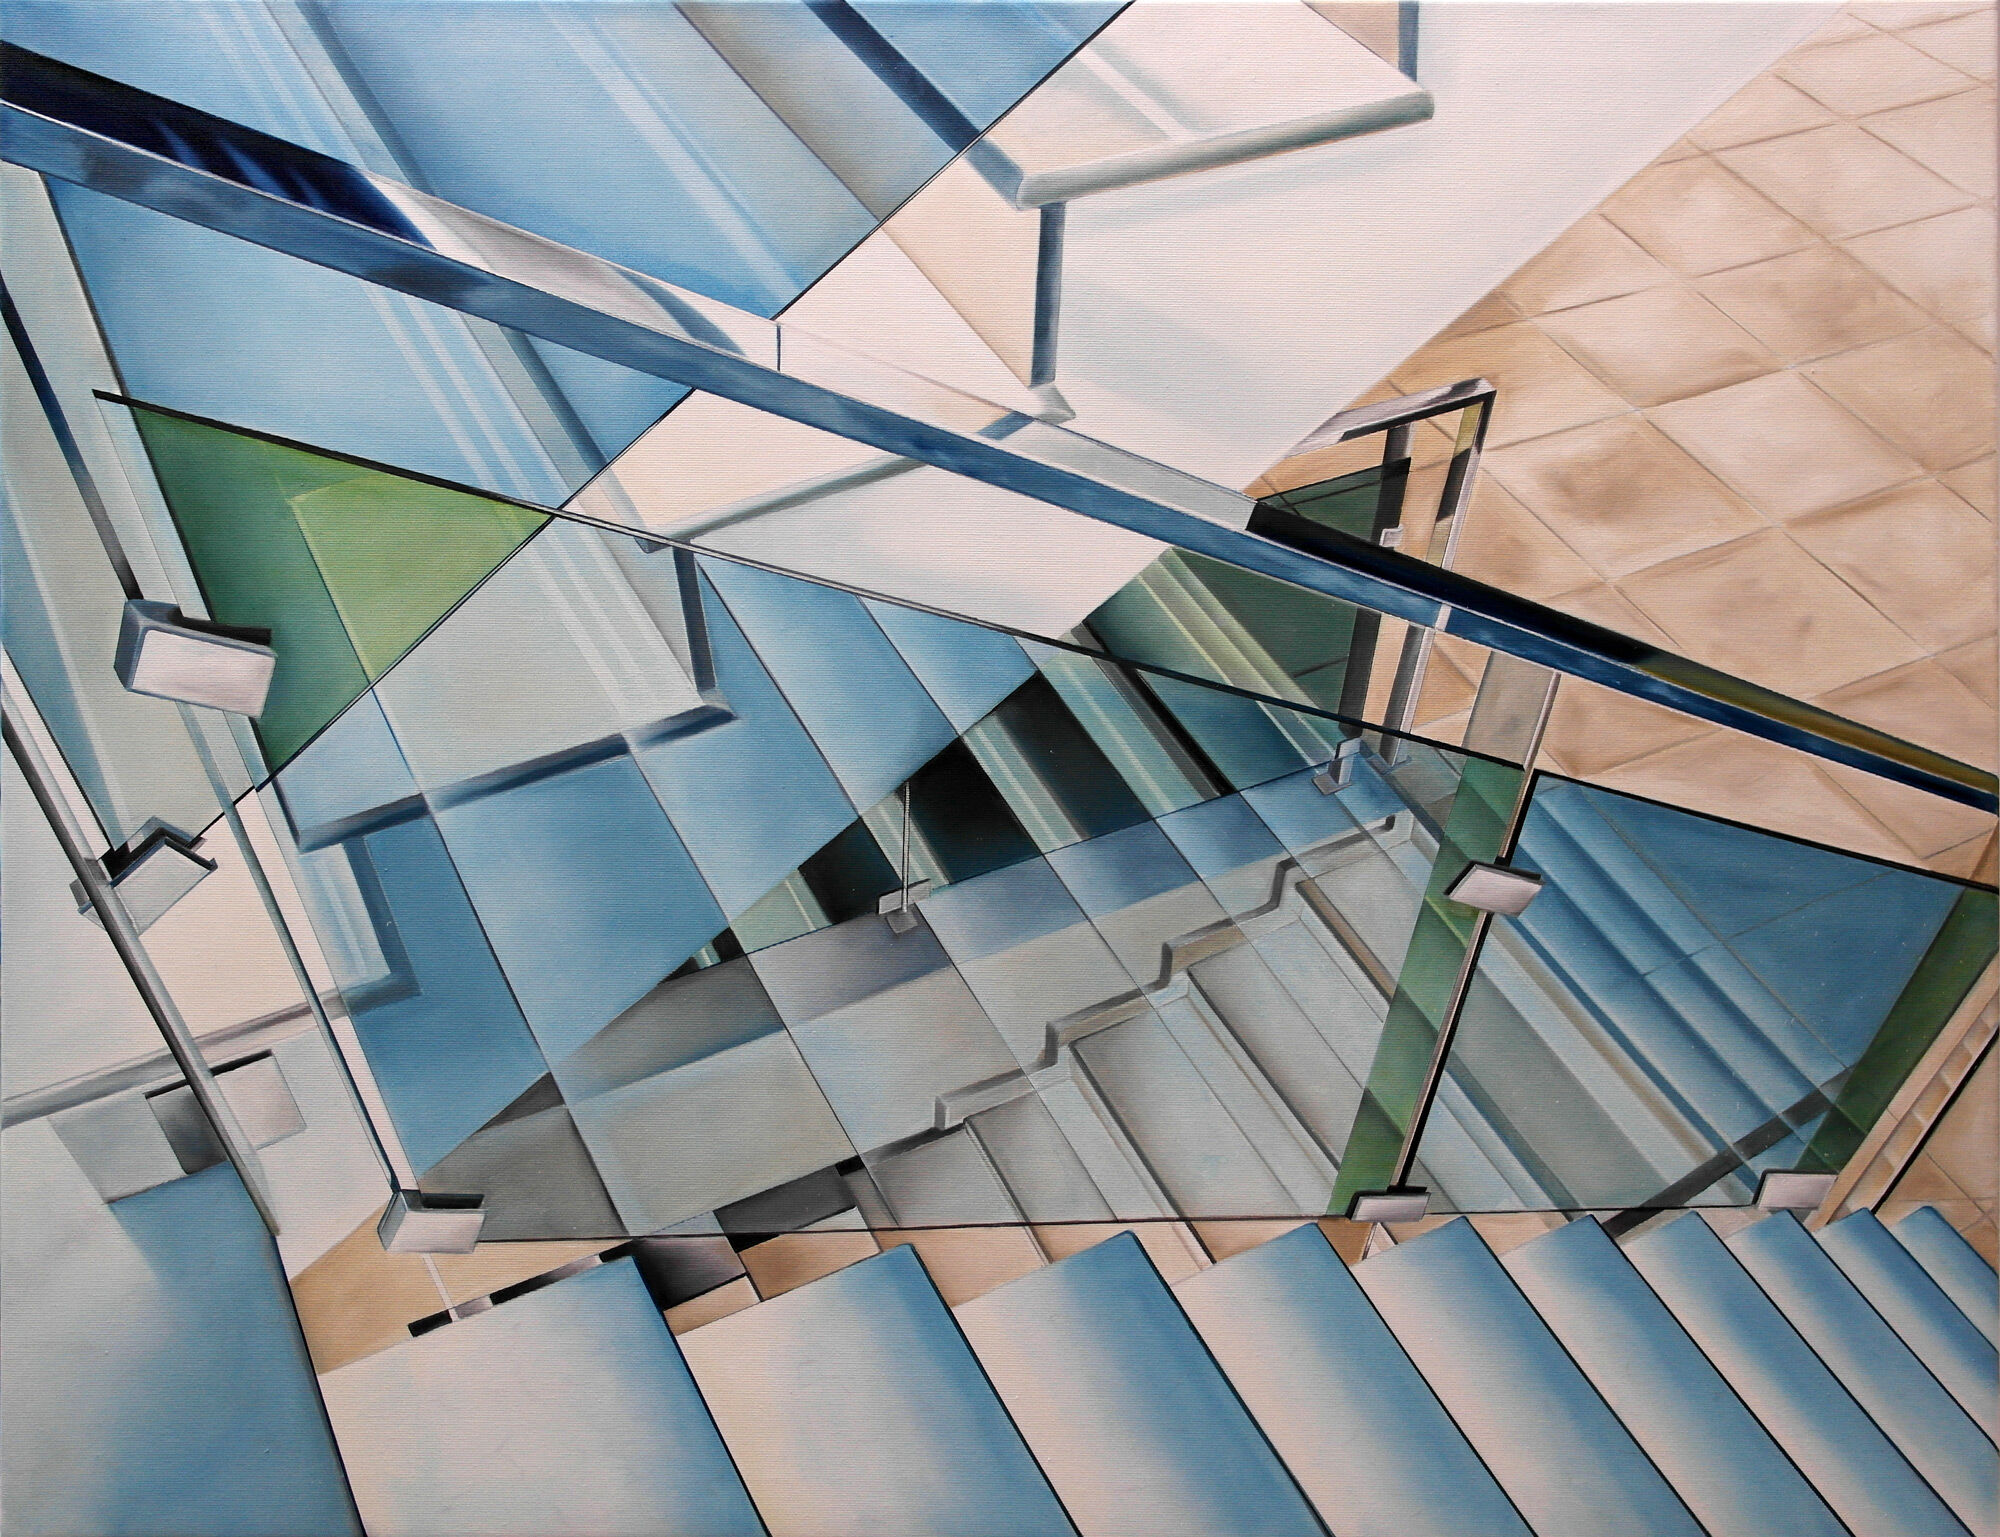 Picture "Staircase" (2019) (Unique piece) by Alex Krull